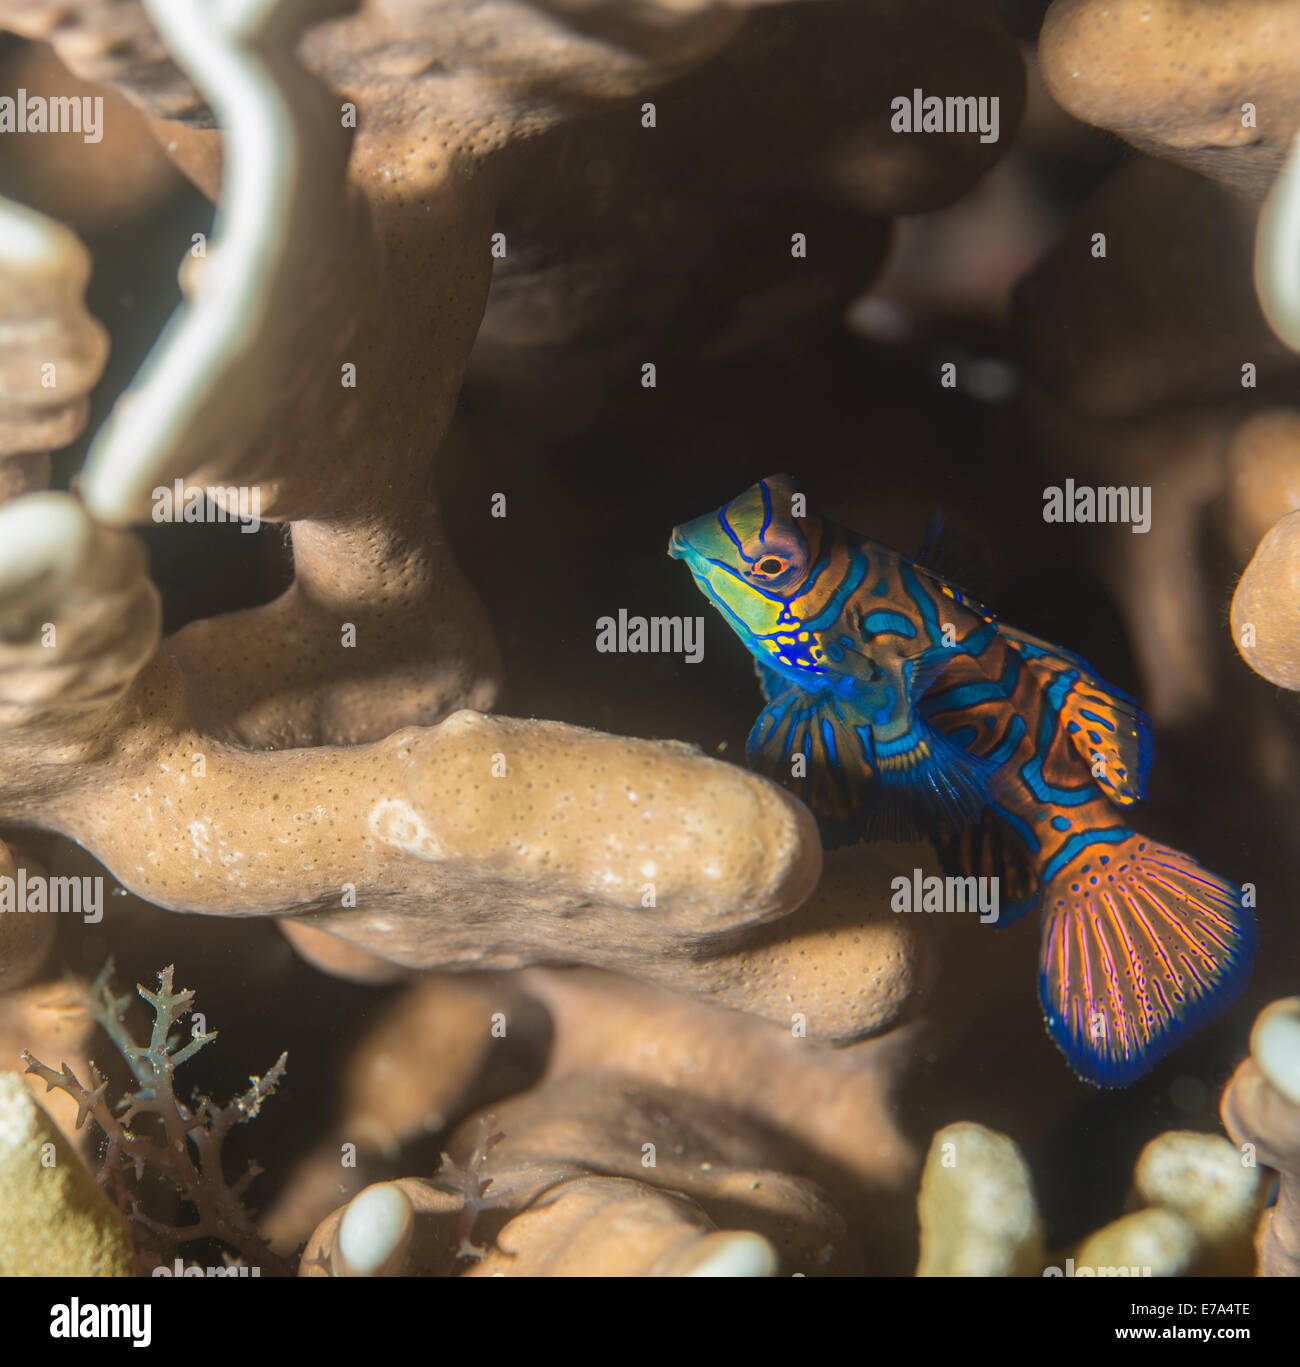 Mandarinfish hiding in the corals Stock Photo